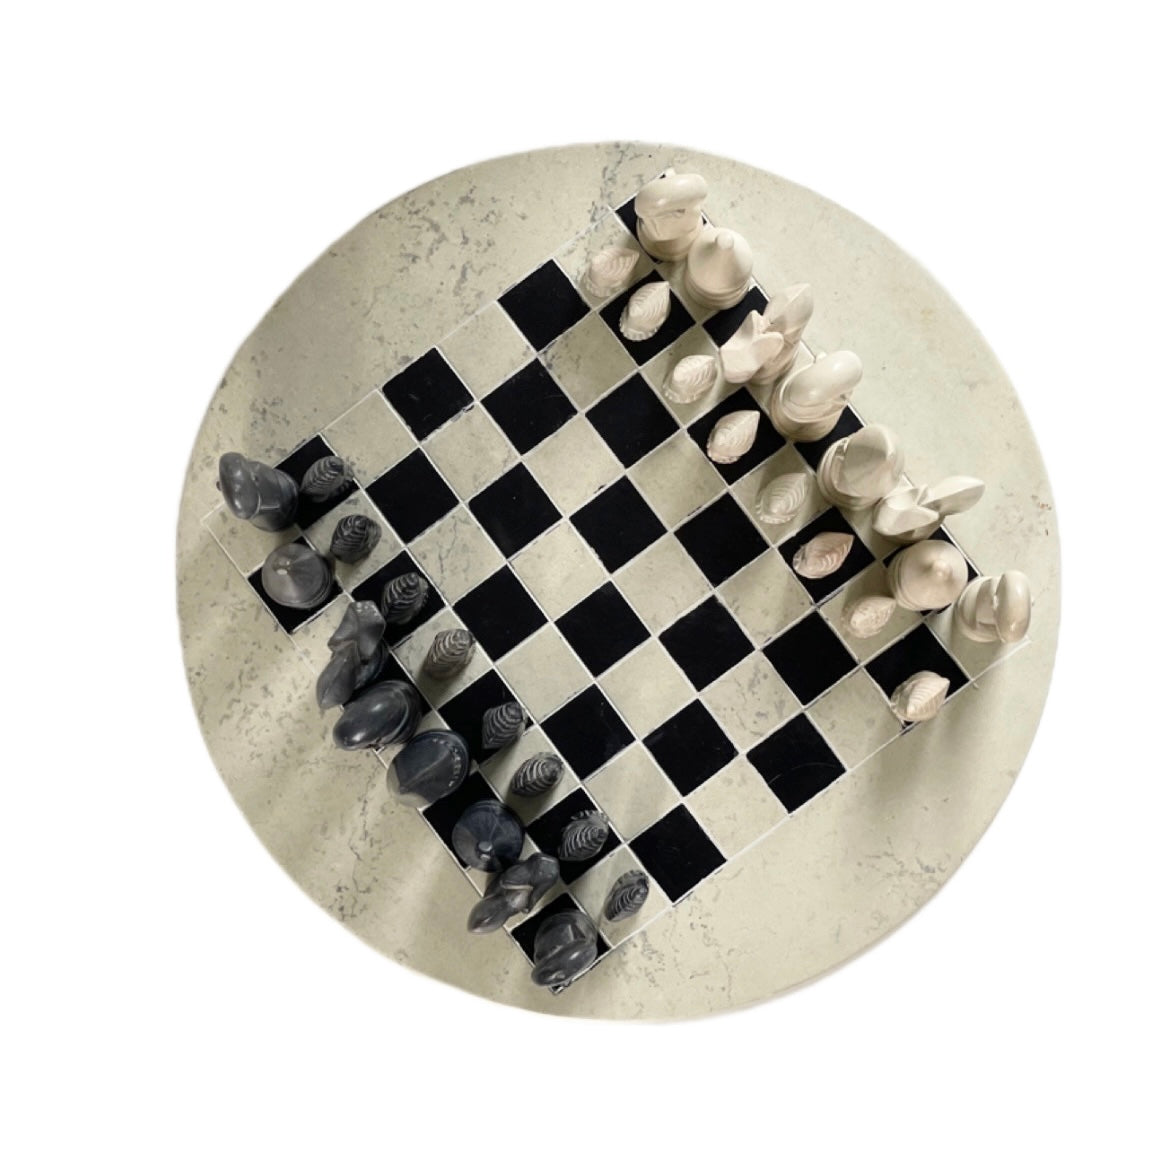 Vintage Soapstone Chess Set